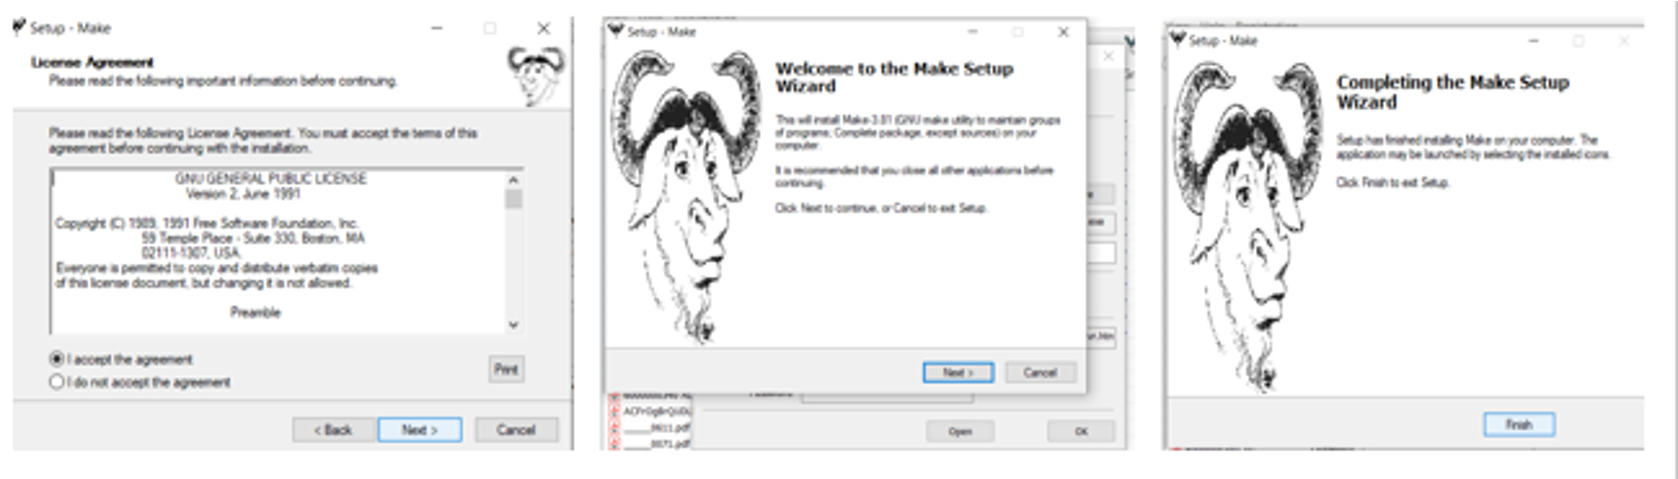  Install GNU Make